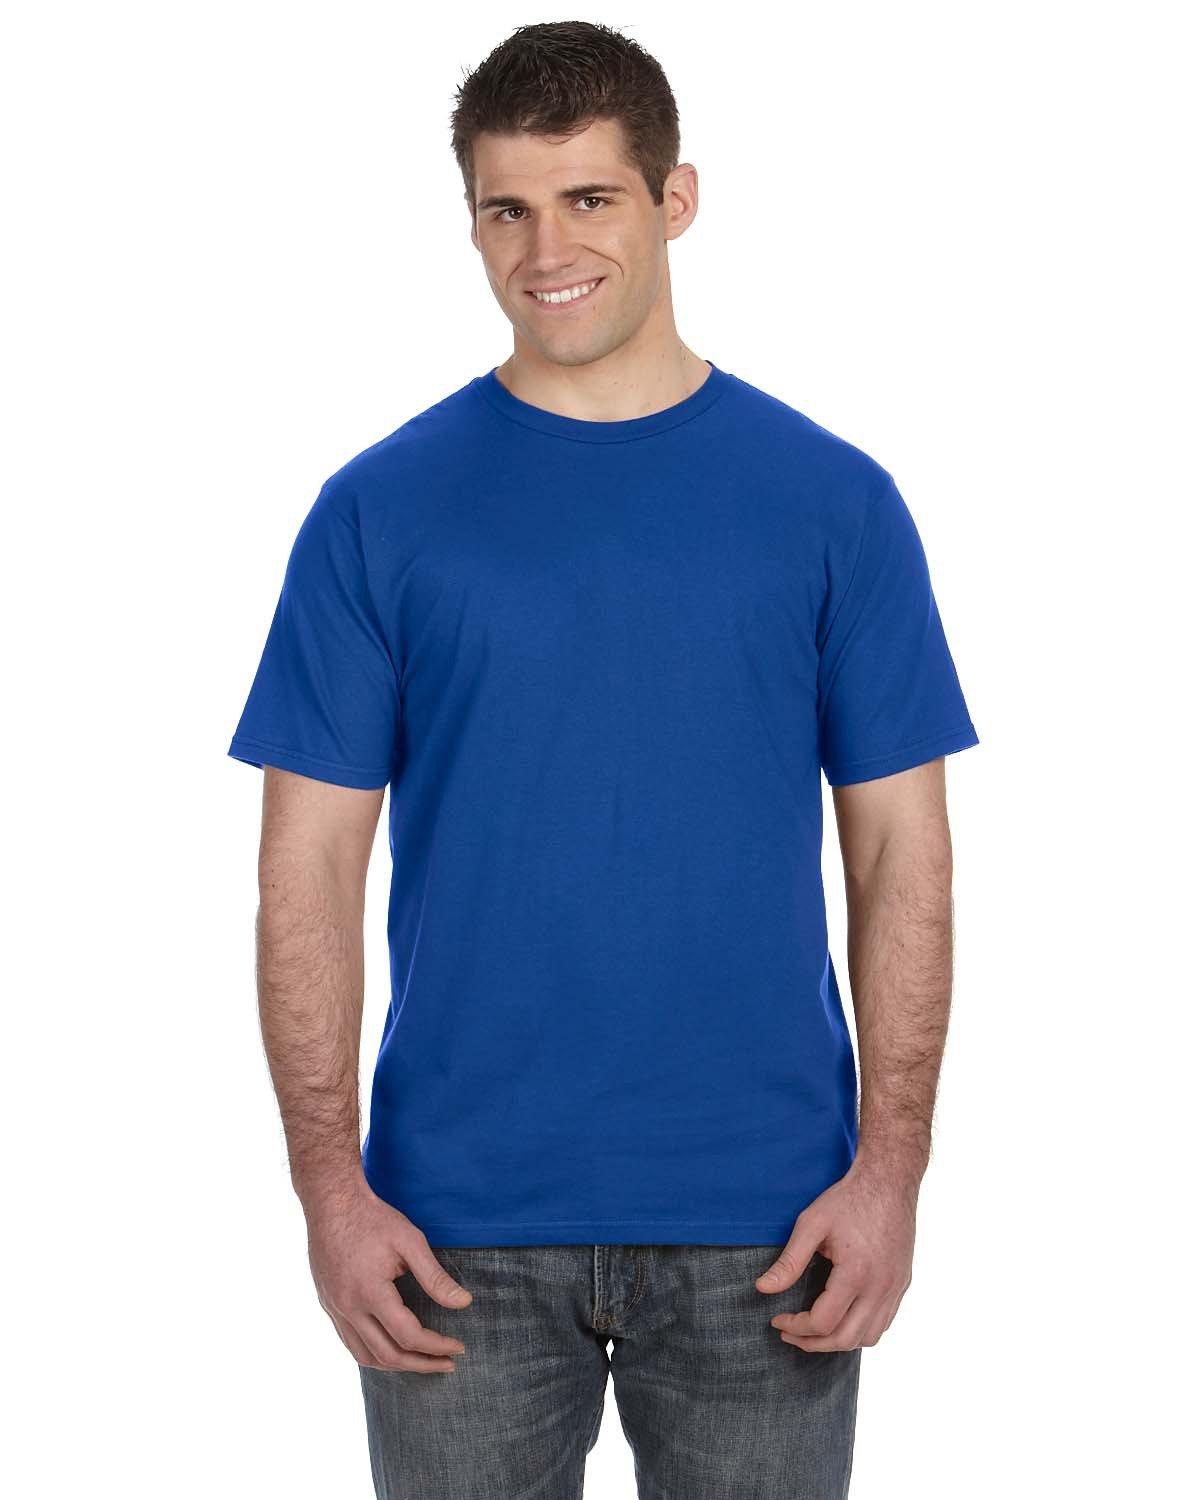 Blank Royal Blue Unisex T-shirt that's 100% Ring Spun Cotton